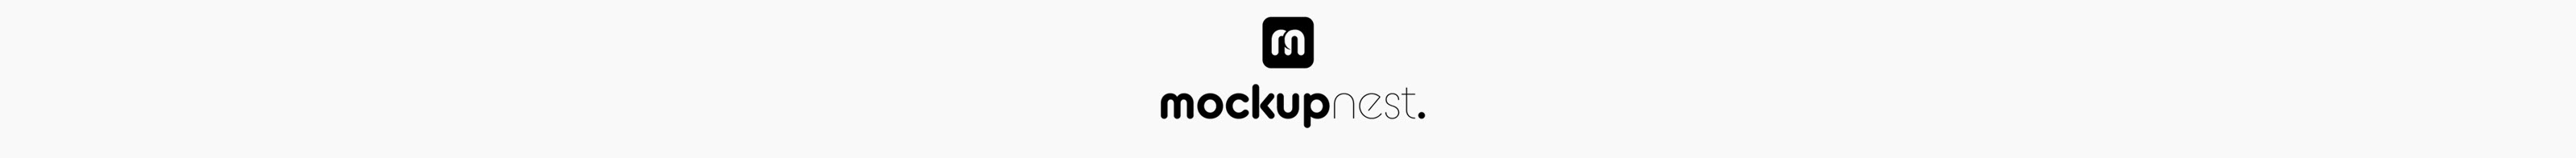 Mockupnest - Free & Premium Mockups's profile banner